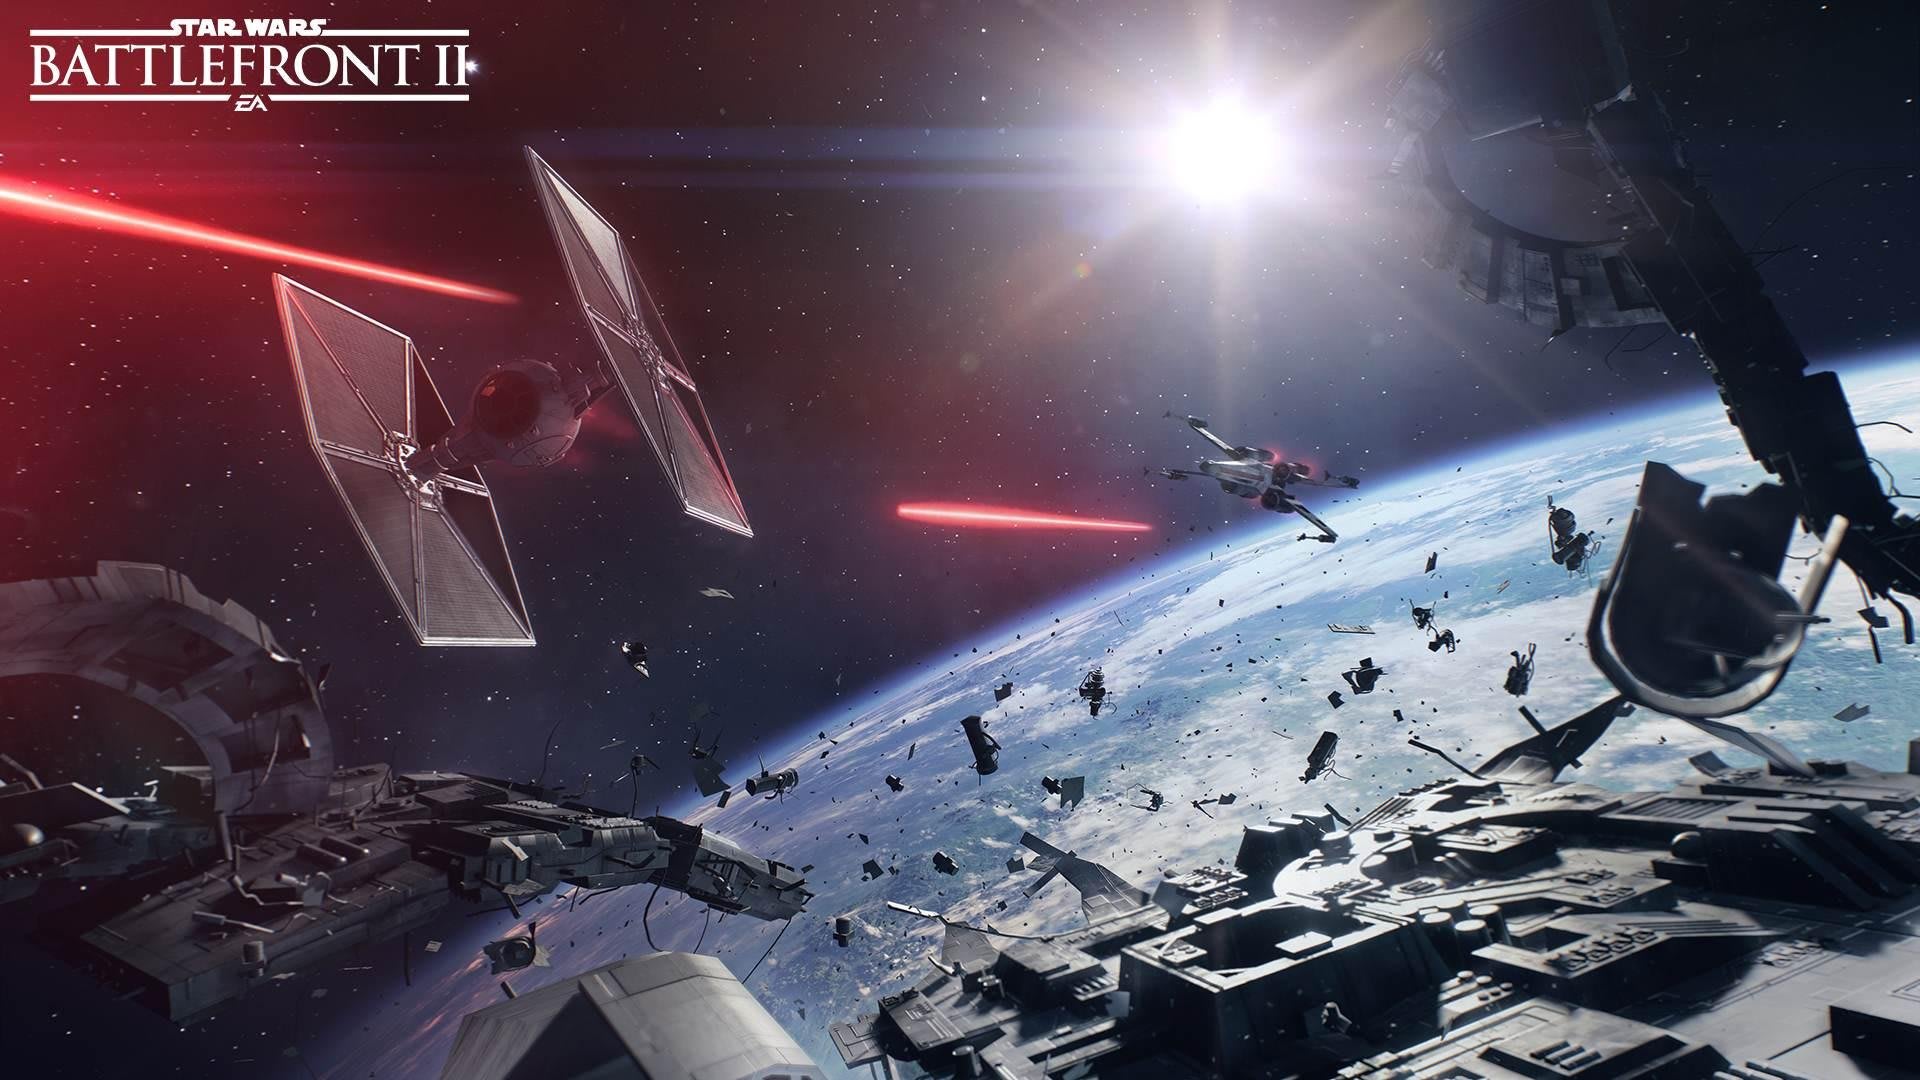 The Star Wars battles Battlefront II needs